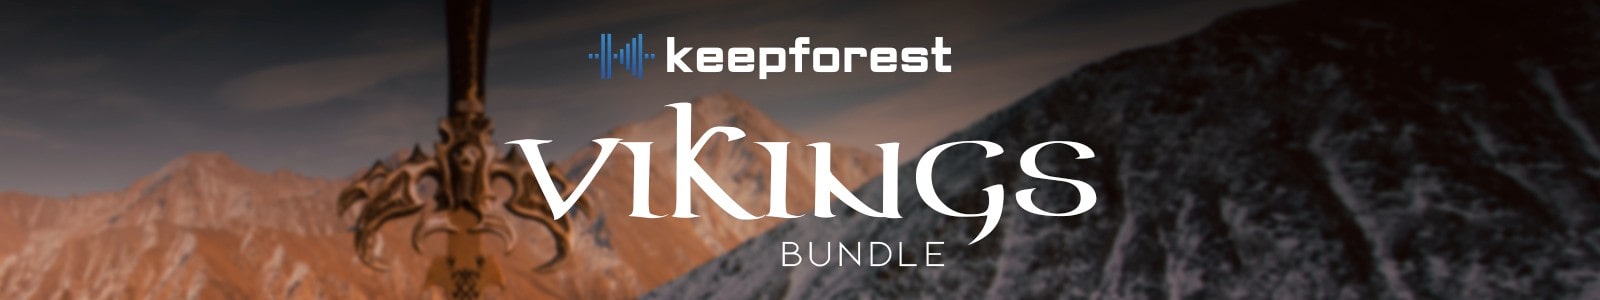 Vikings Bundle by Keepforest